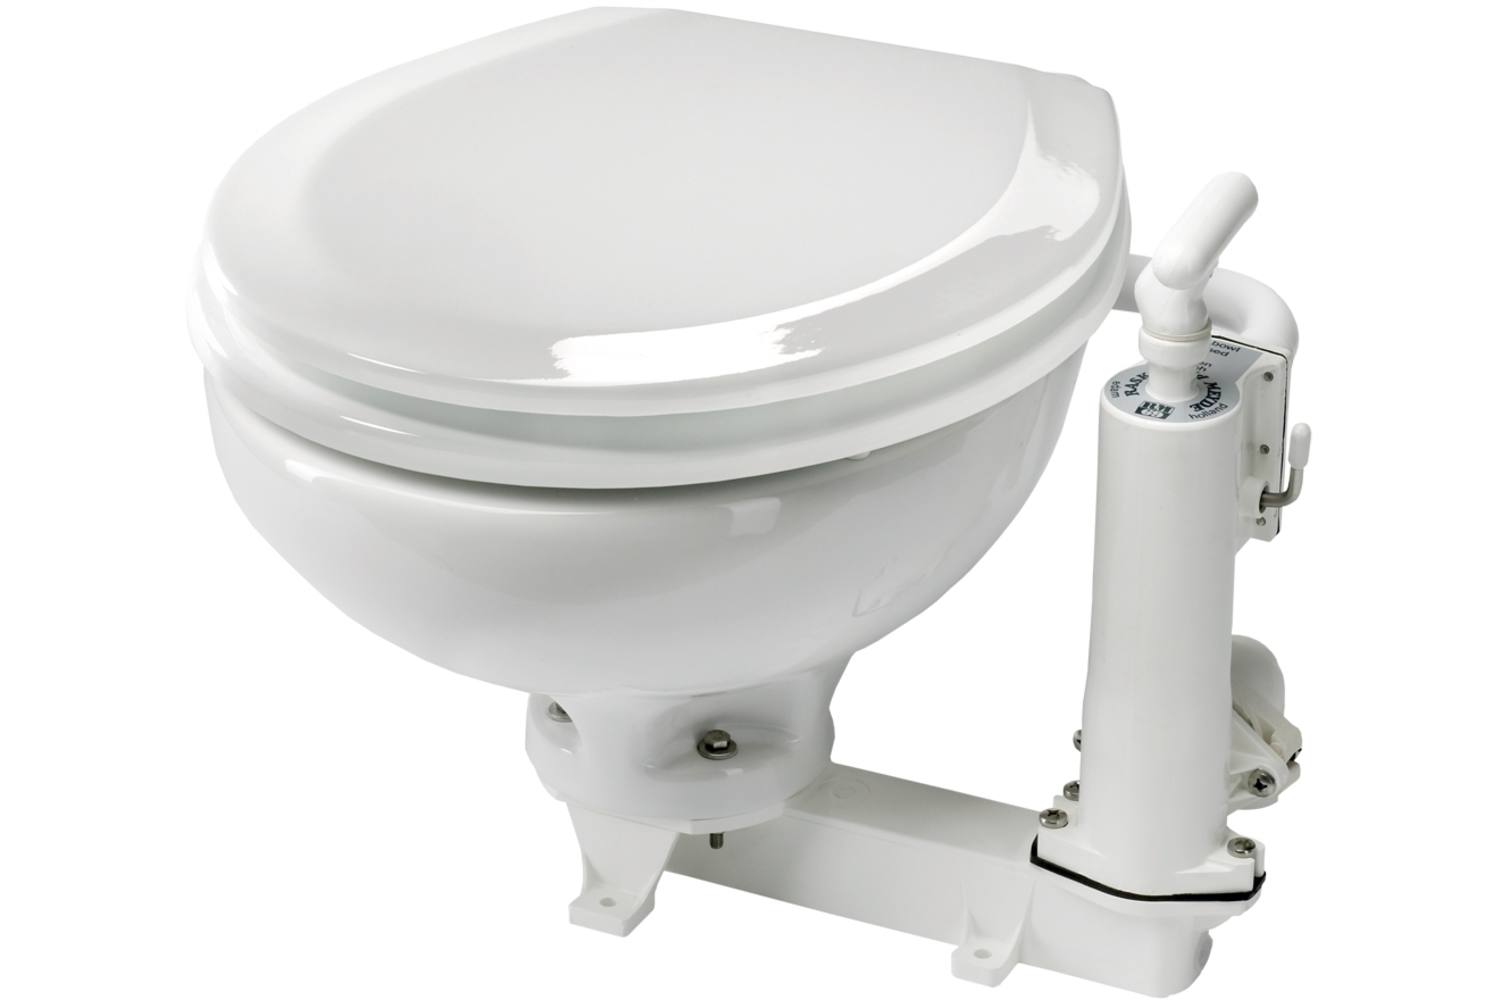 RM69 toilet grote pot houten bril